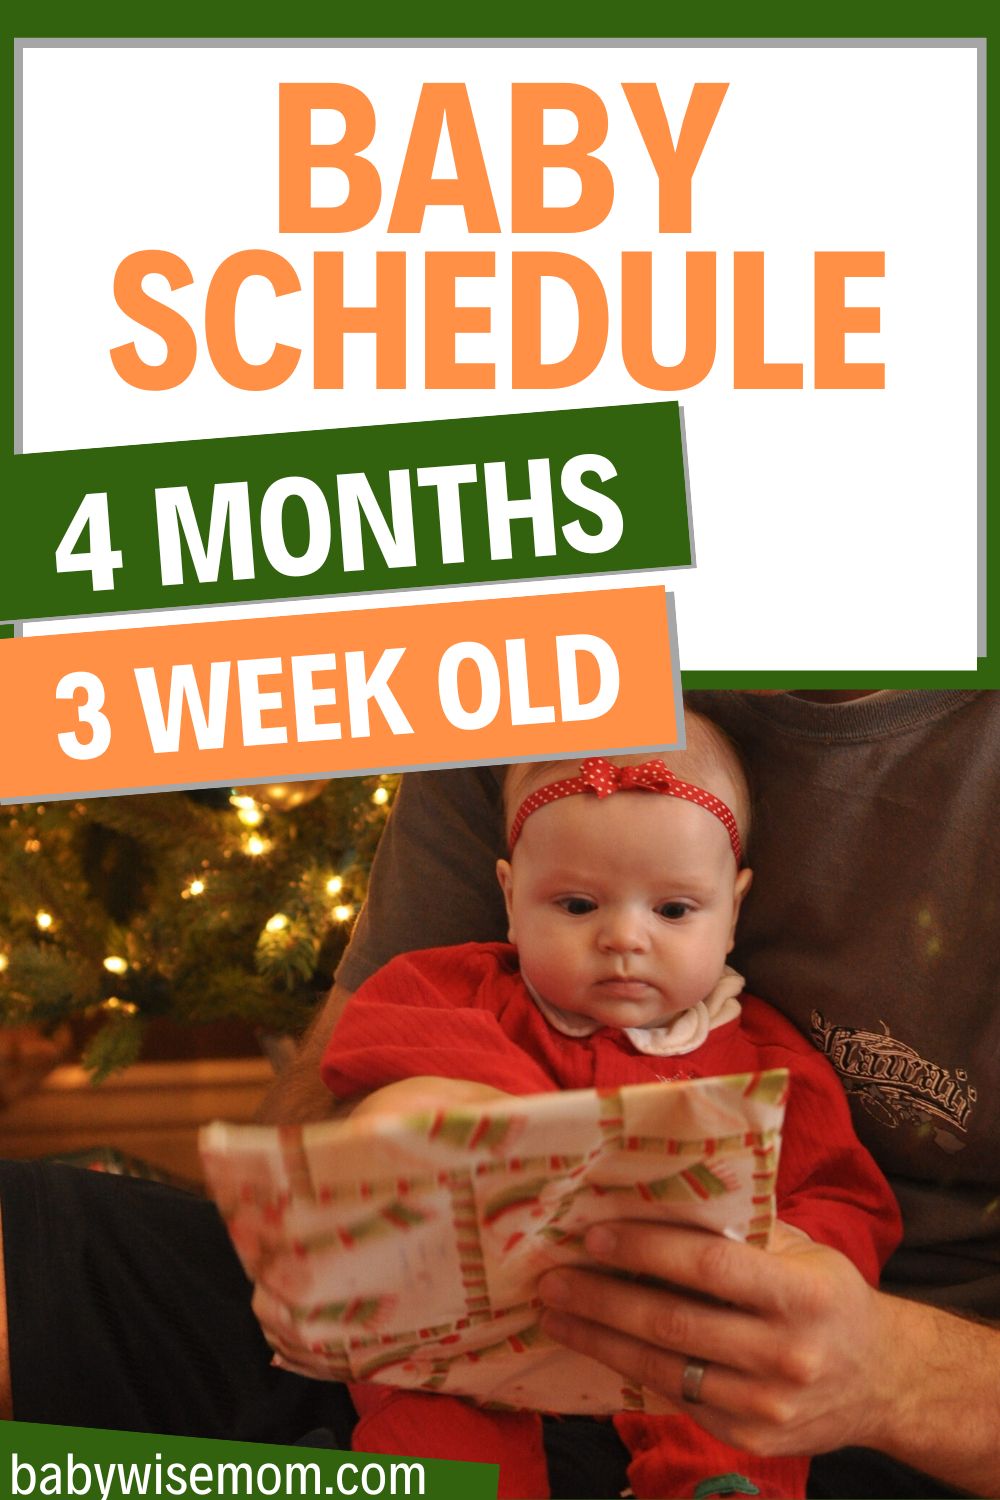 Baby schedule 4 months 3 weeks old pinnable image